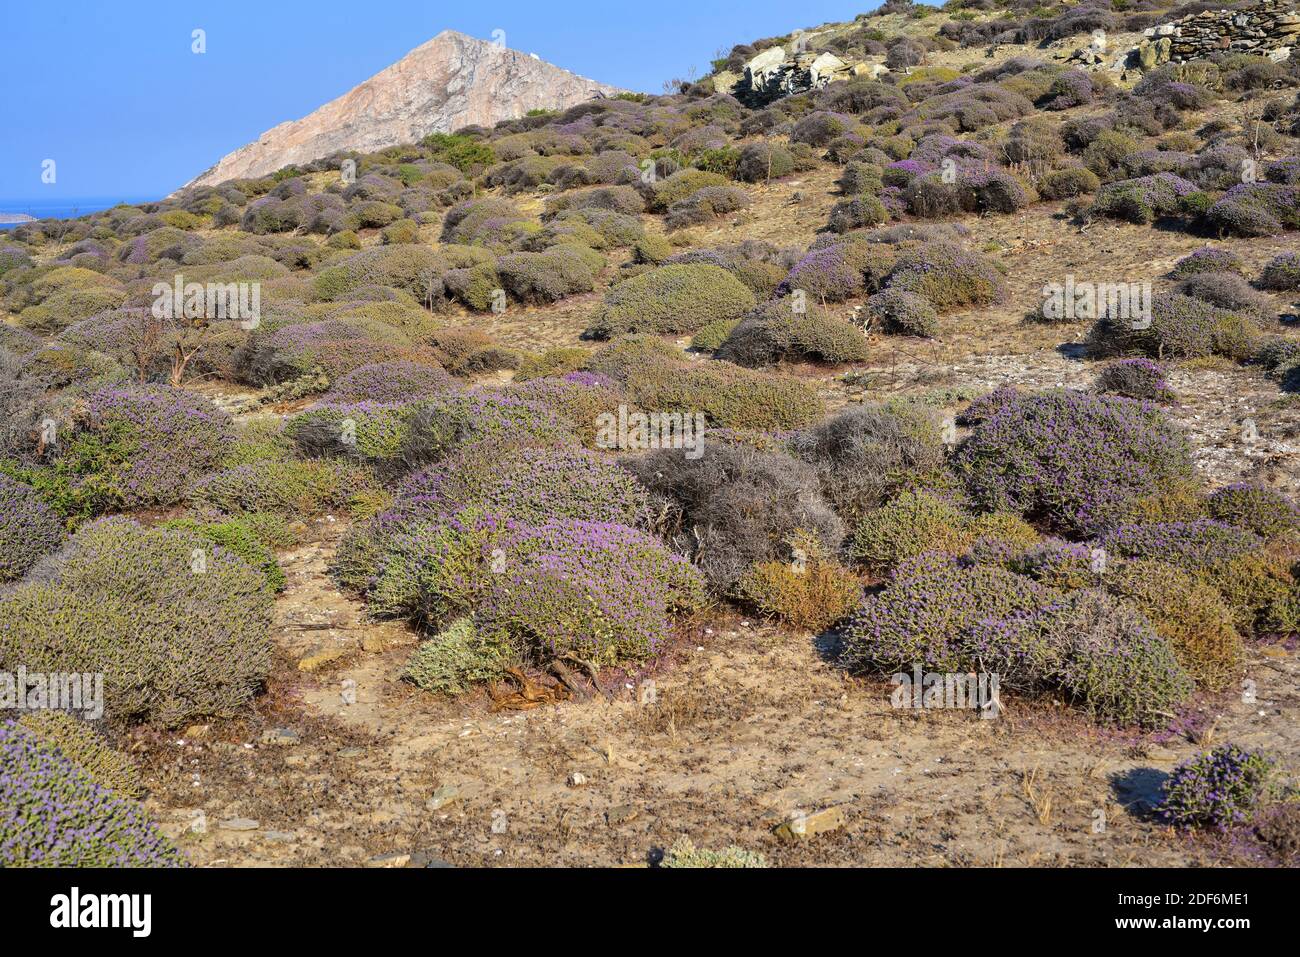 Spanish oregano (Thymus capitatus, Thymbra capitata or Coridothymus capitatus) is a medicinal and compact shrub native to coastal regions of the Stock Photo